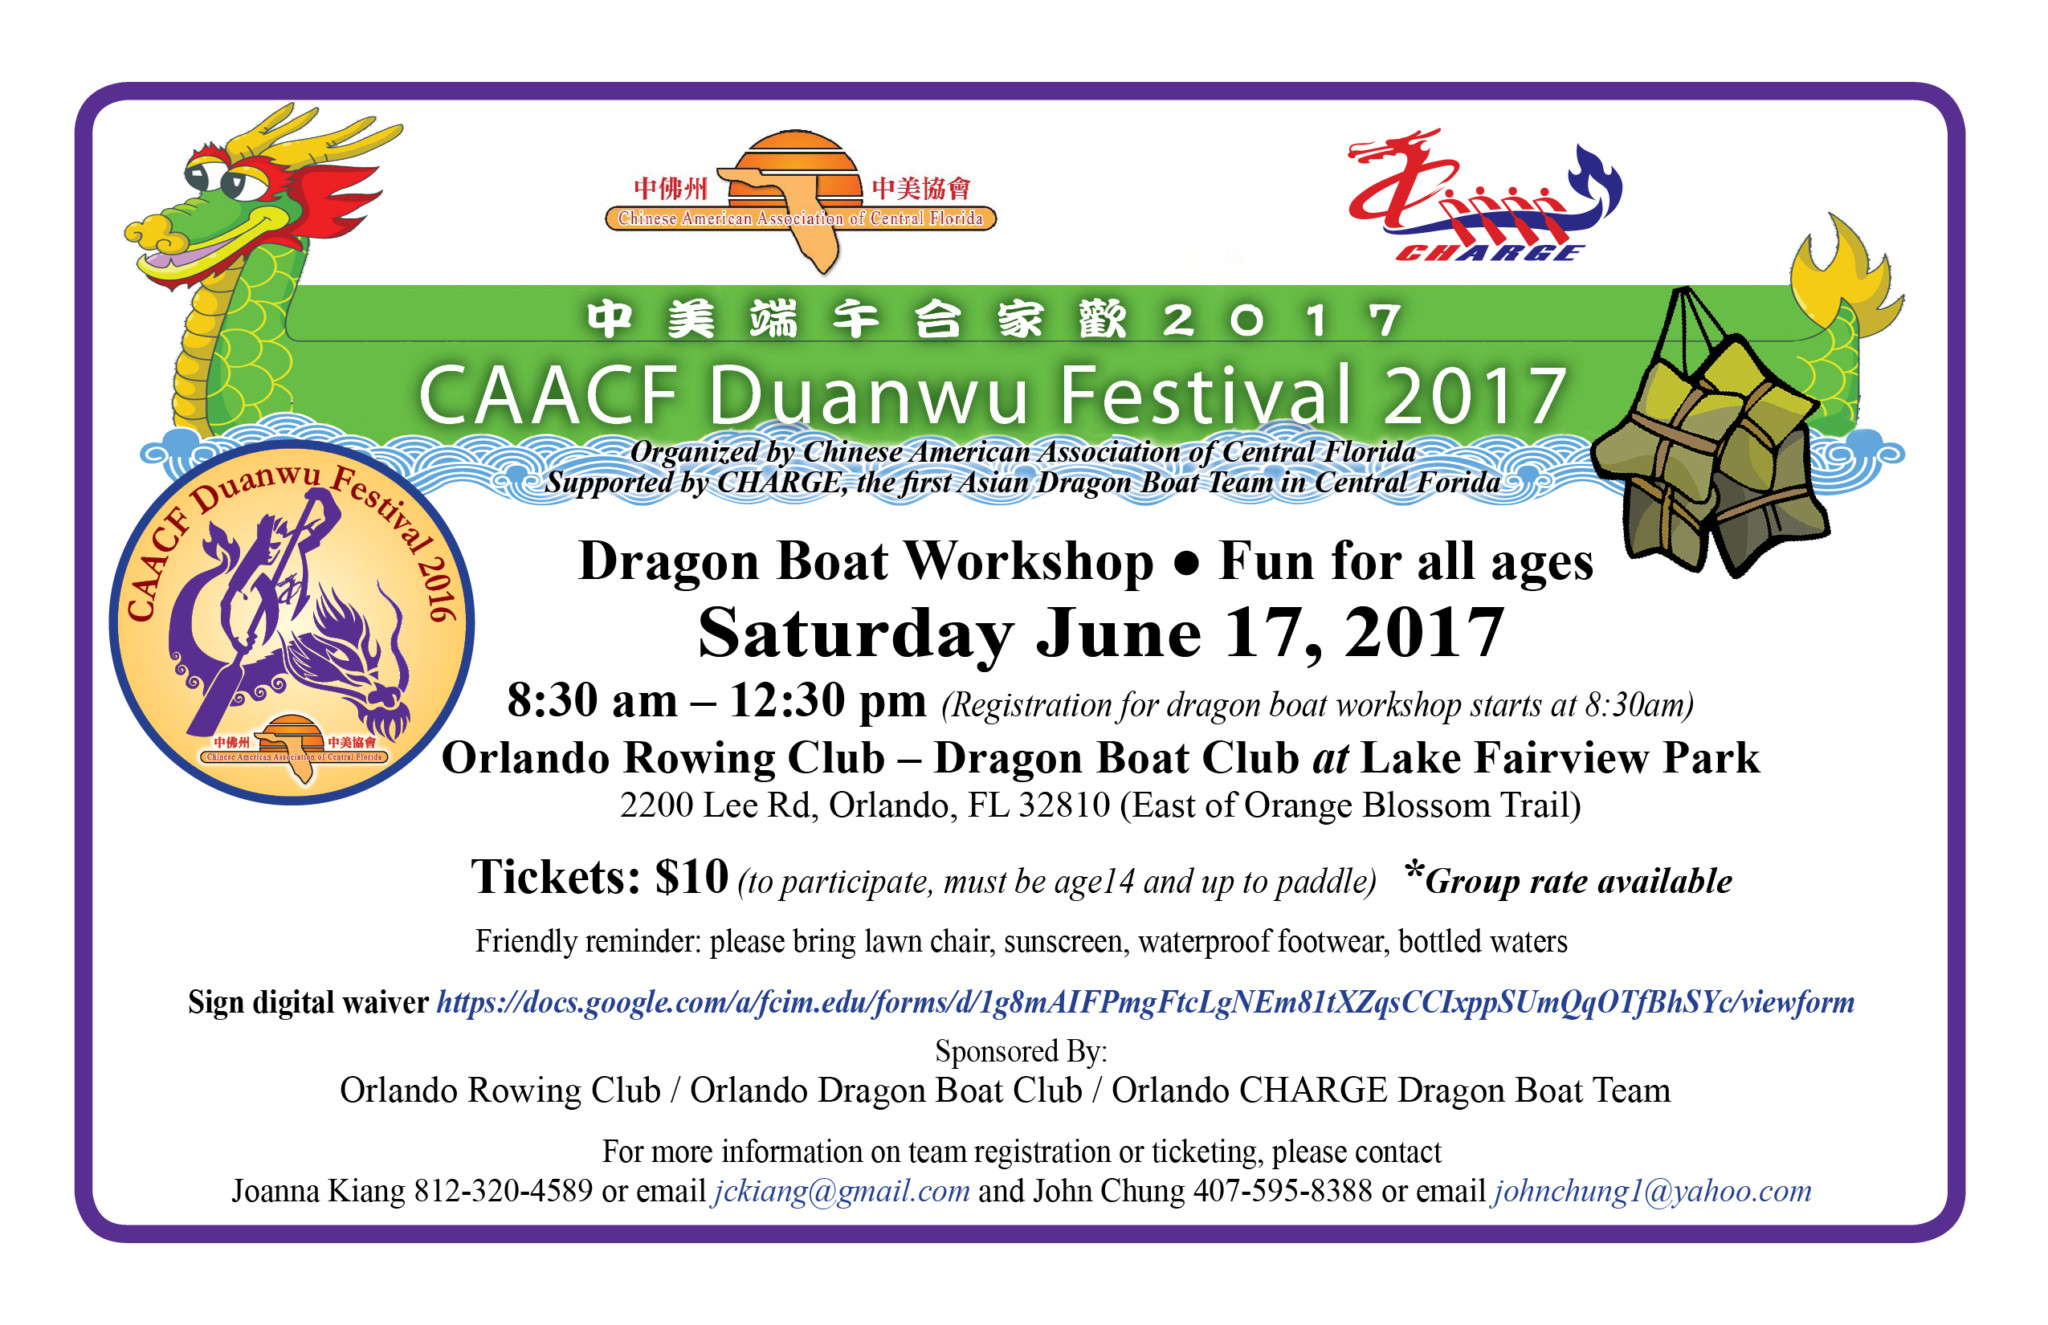 CAACF Duanwu Festival 2017